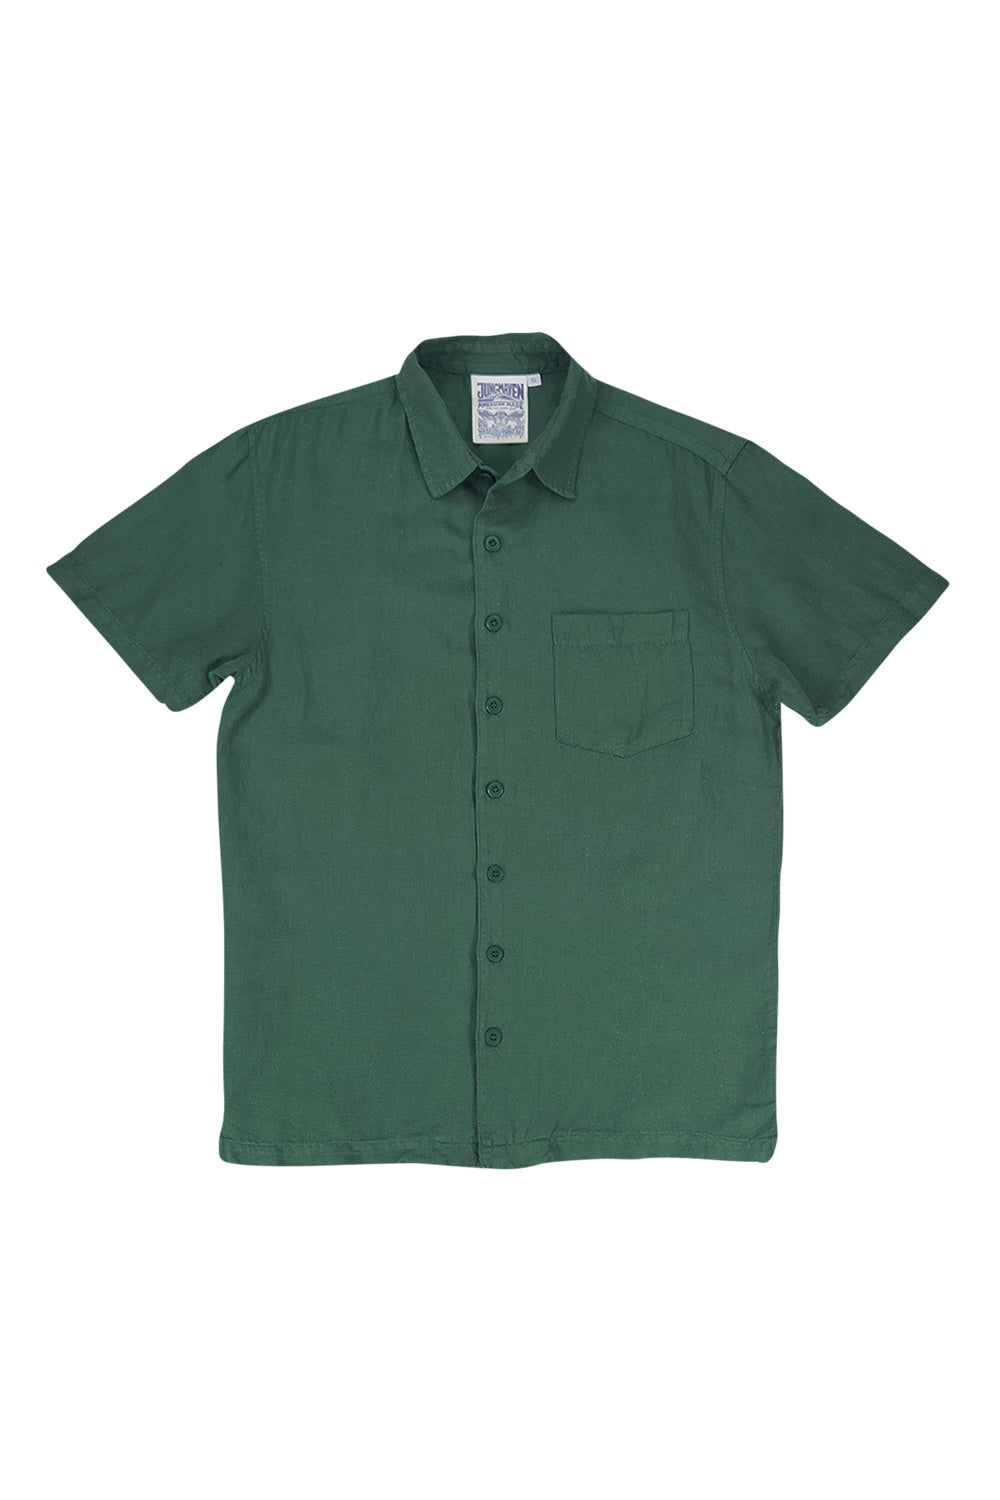 Tornado Shirt | Jungmaven Hemp Clothing & Accessories / Color: Hunter Green